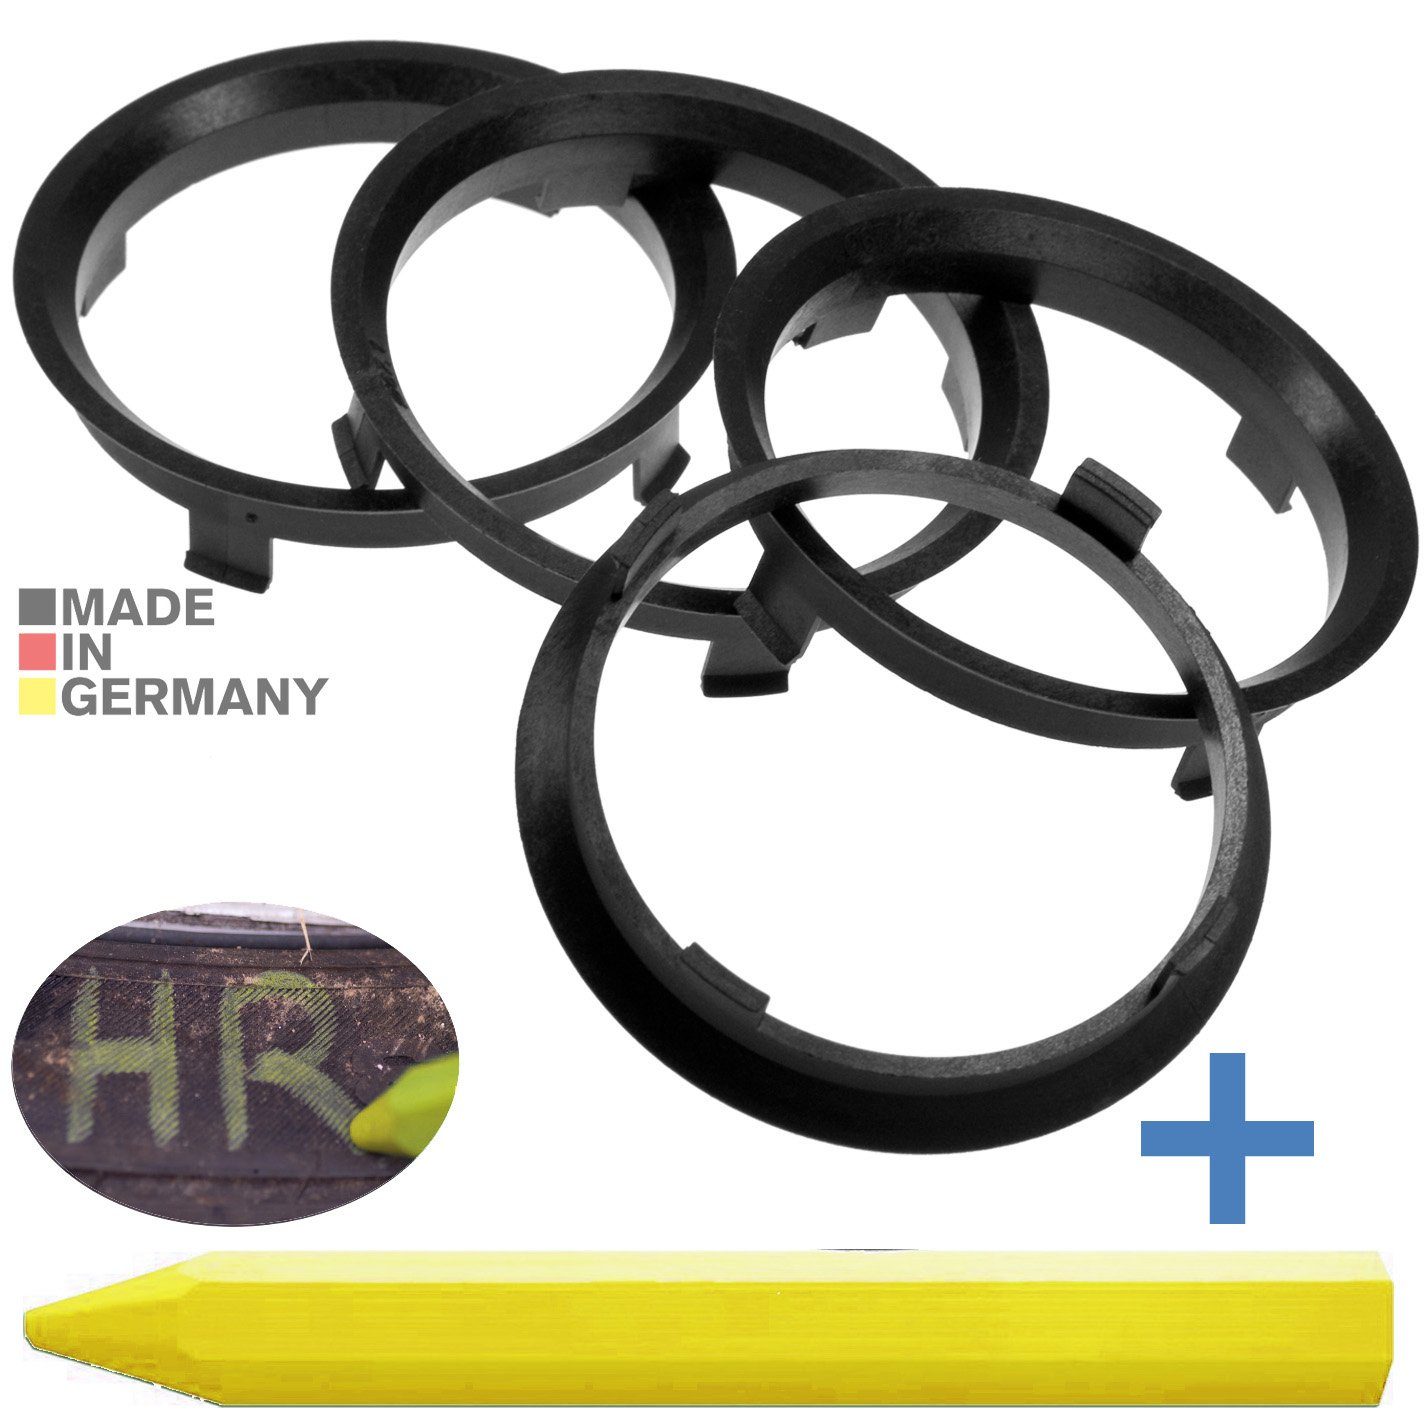 1x Reifenstift 4X 71,6 + Reifen Zentrierringe Stift, RKC Ringe Fett mm Maße: 67,1 Schwarz x Kreide Felgen